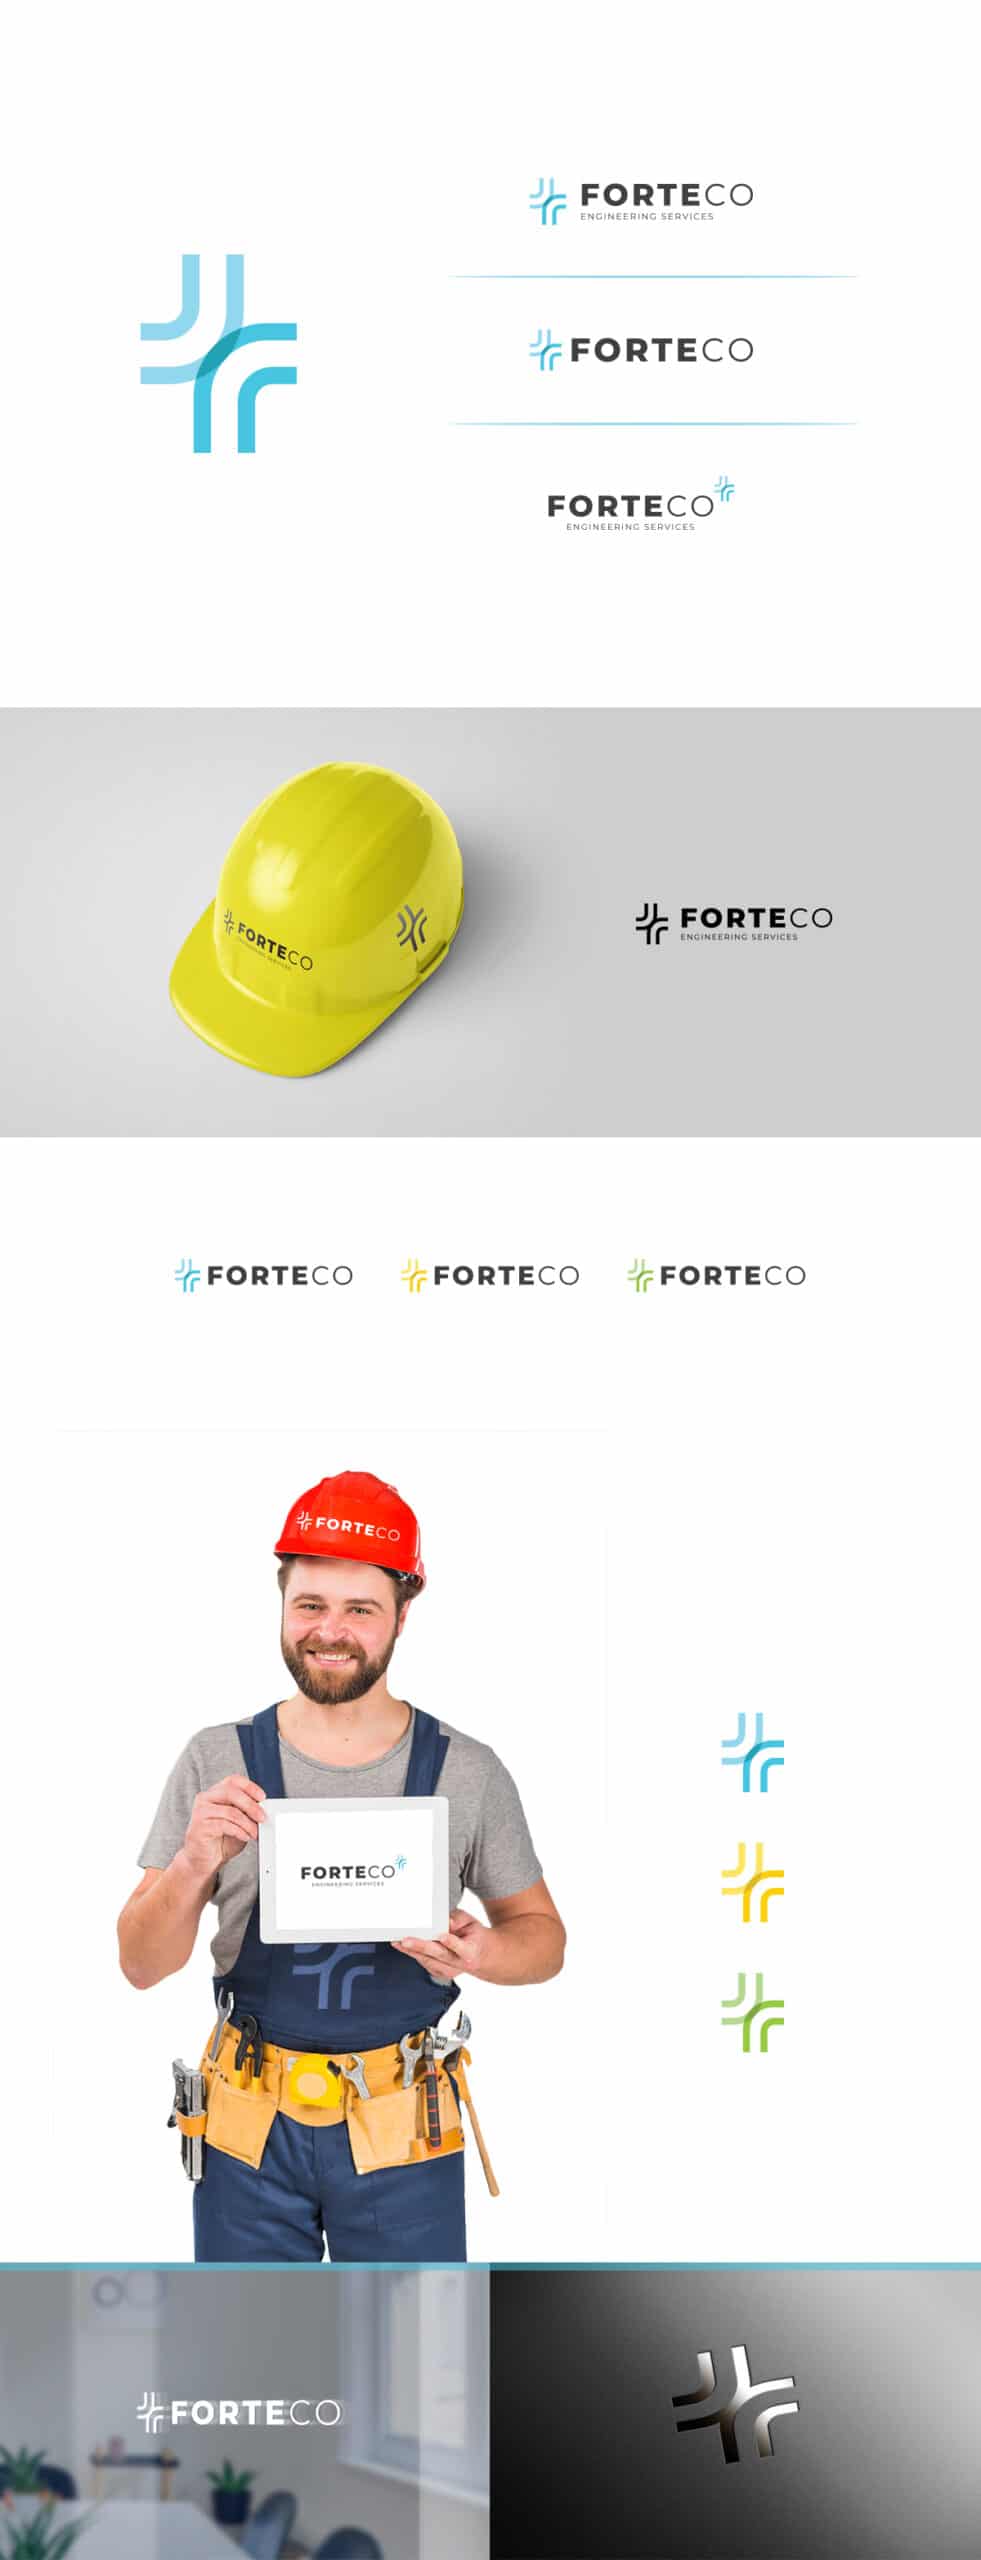 Forteco plus logotip scaled 1